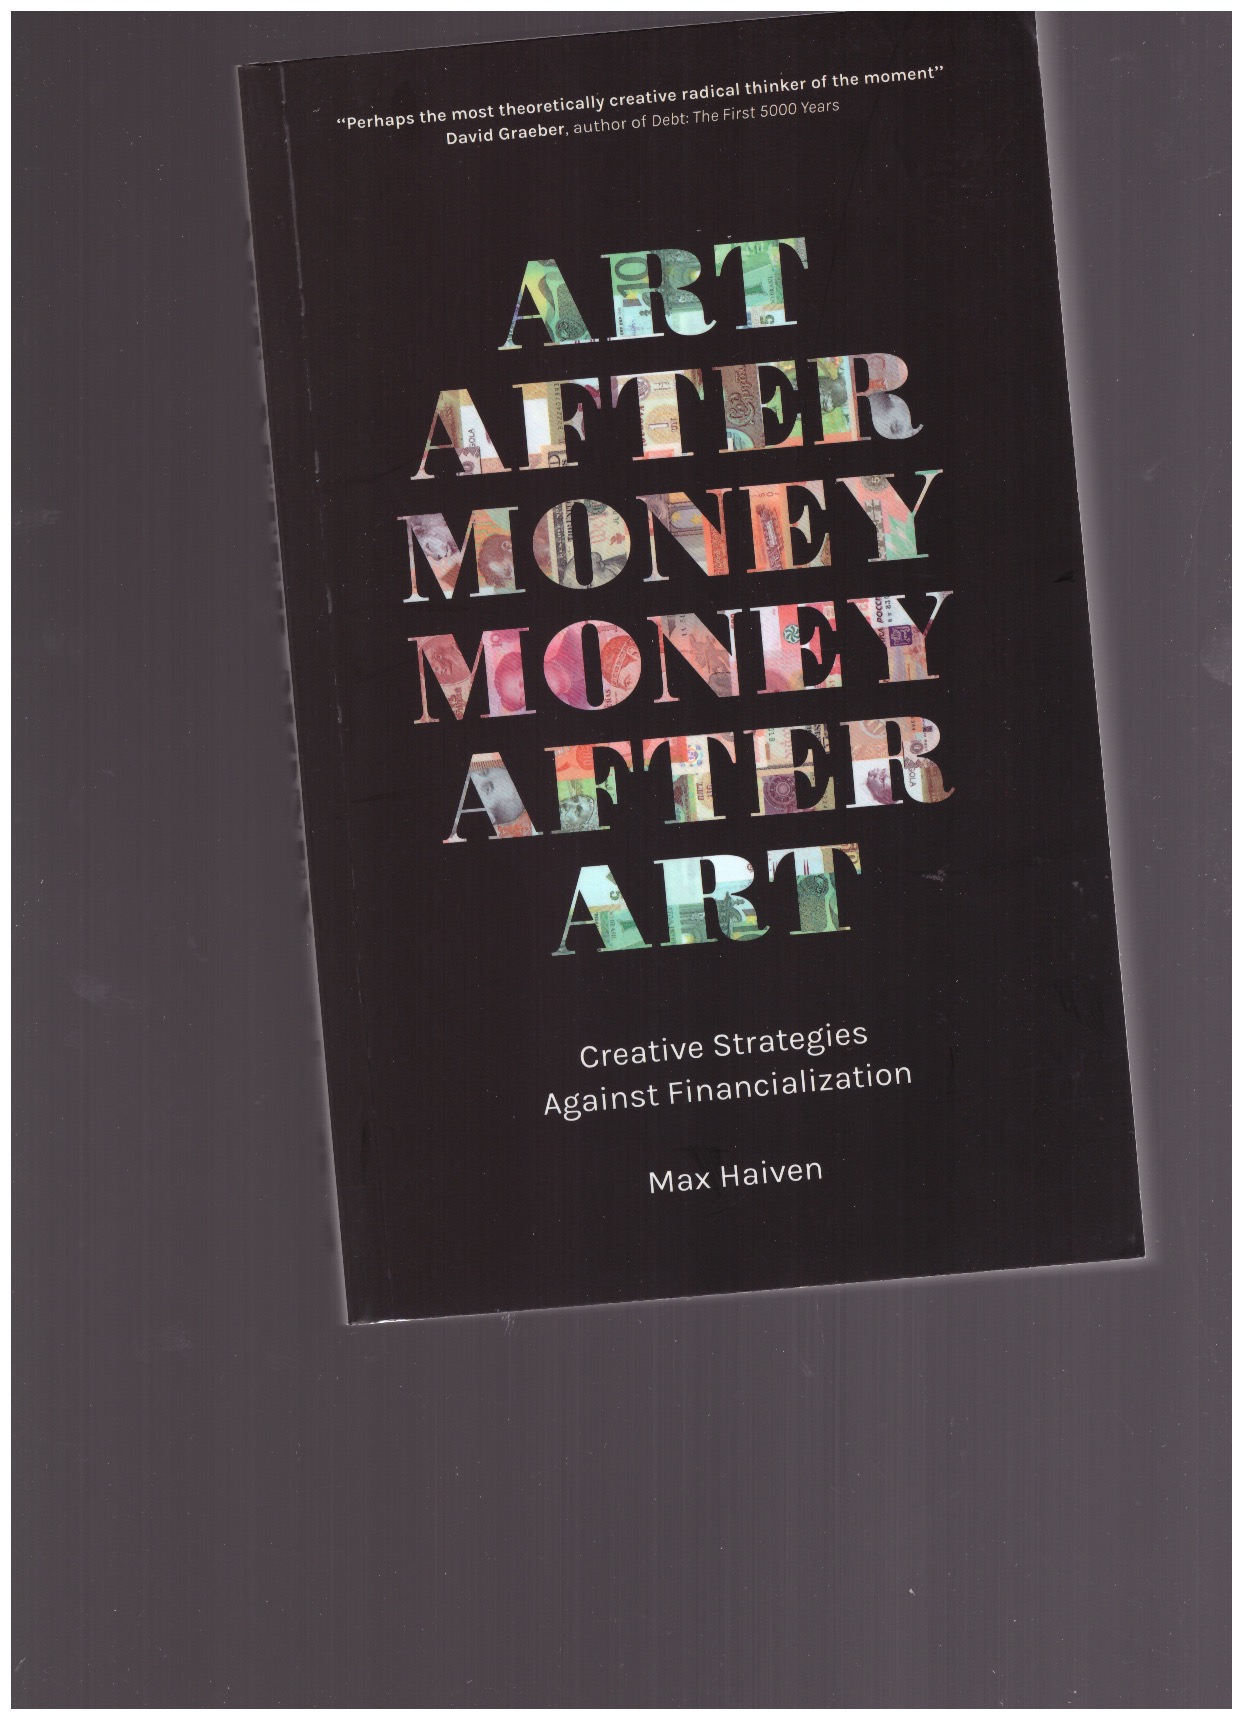 HAIVEN, Max - Art after money, money after art